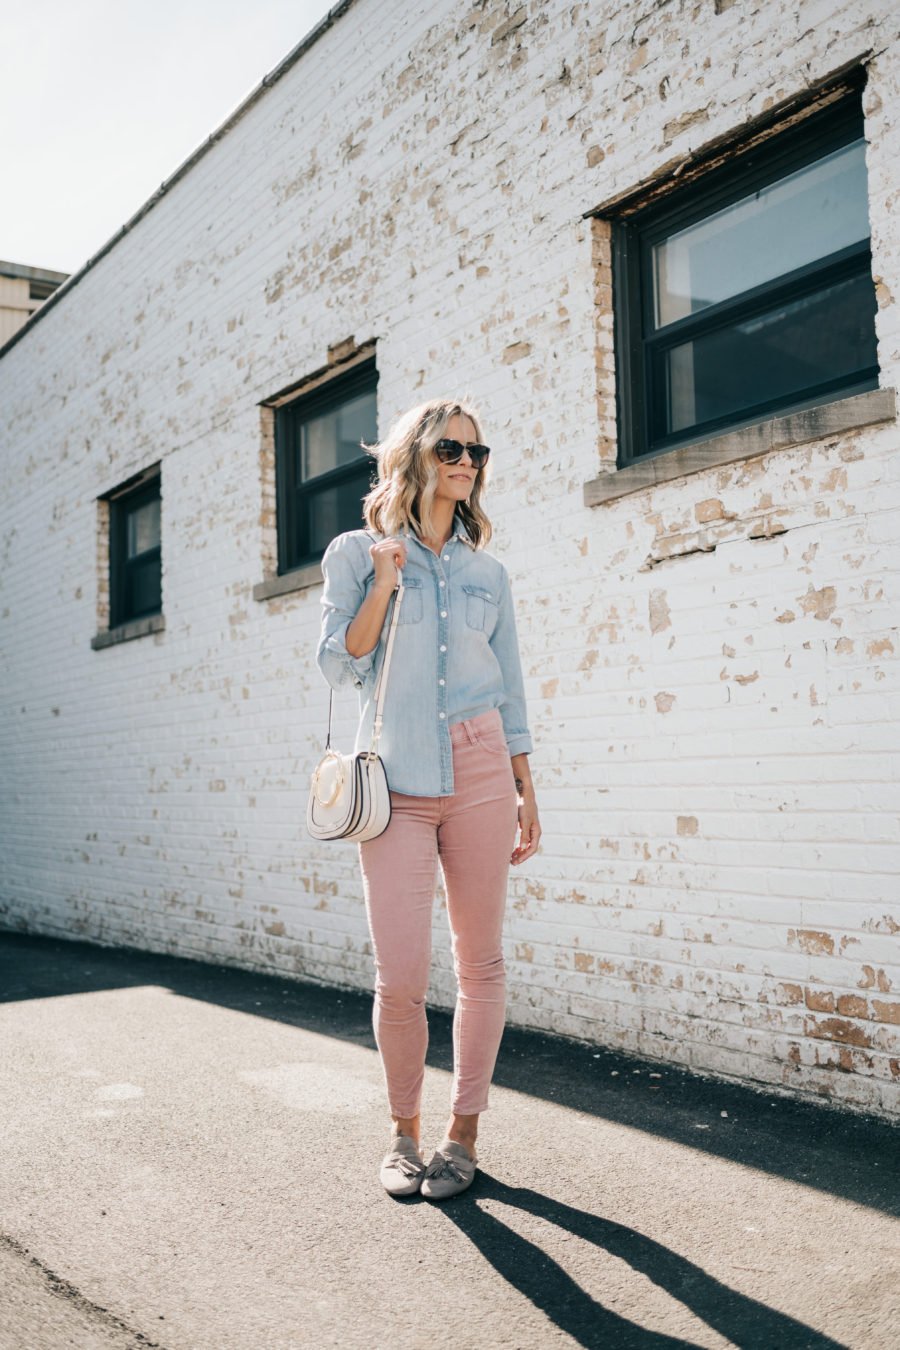 Denim shirt, pink jeans, Chloe dupe bag, sunglasses, and mules